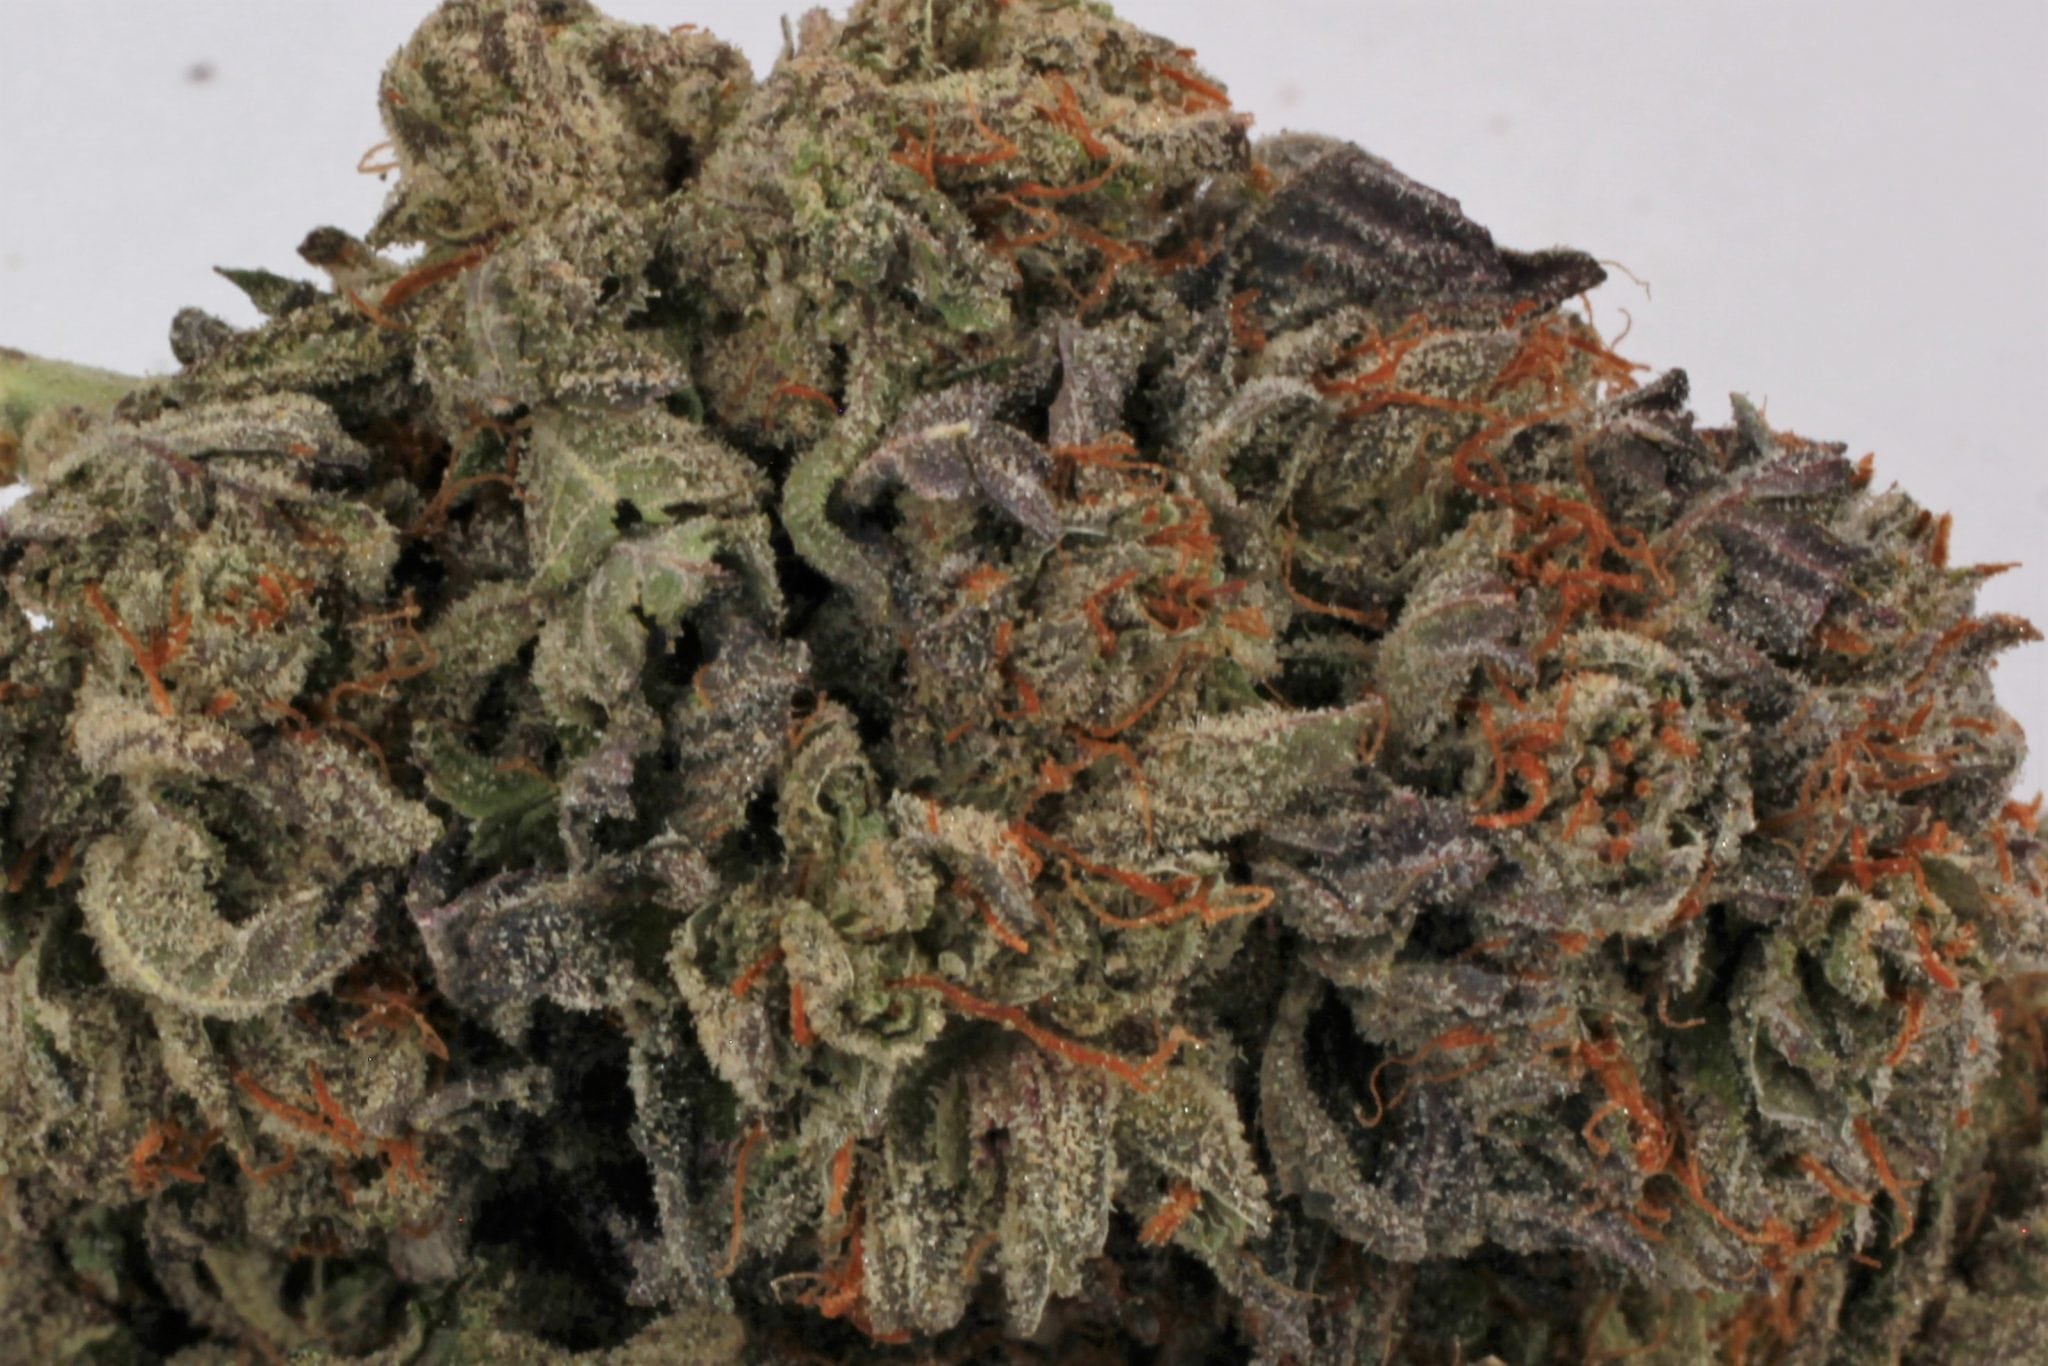 Buy Grand Daddy Purple  Marijuana Online in Canada 4 20 